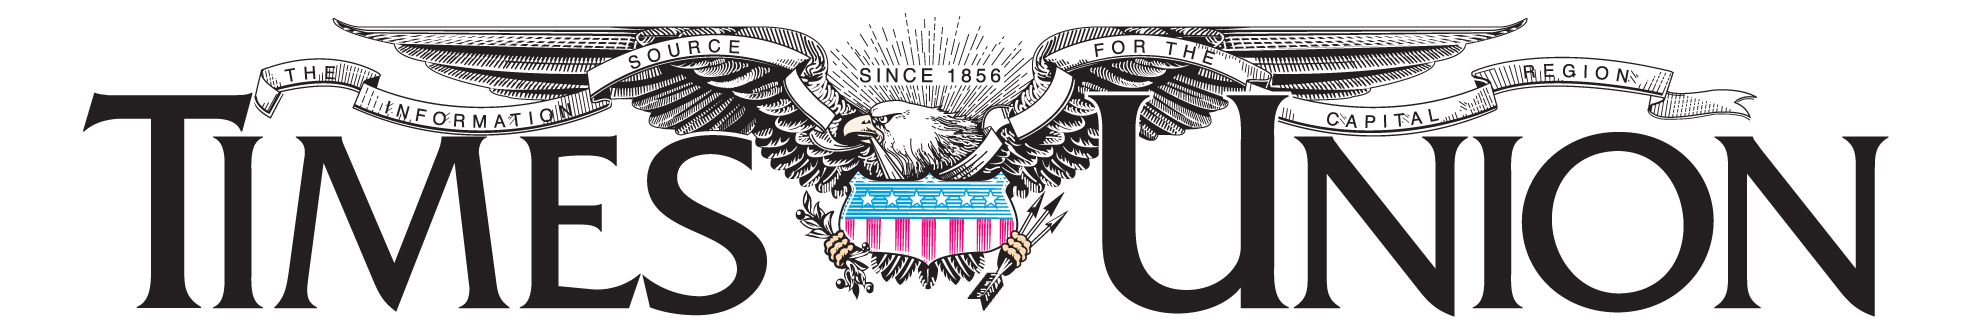 Times Union logo